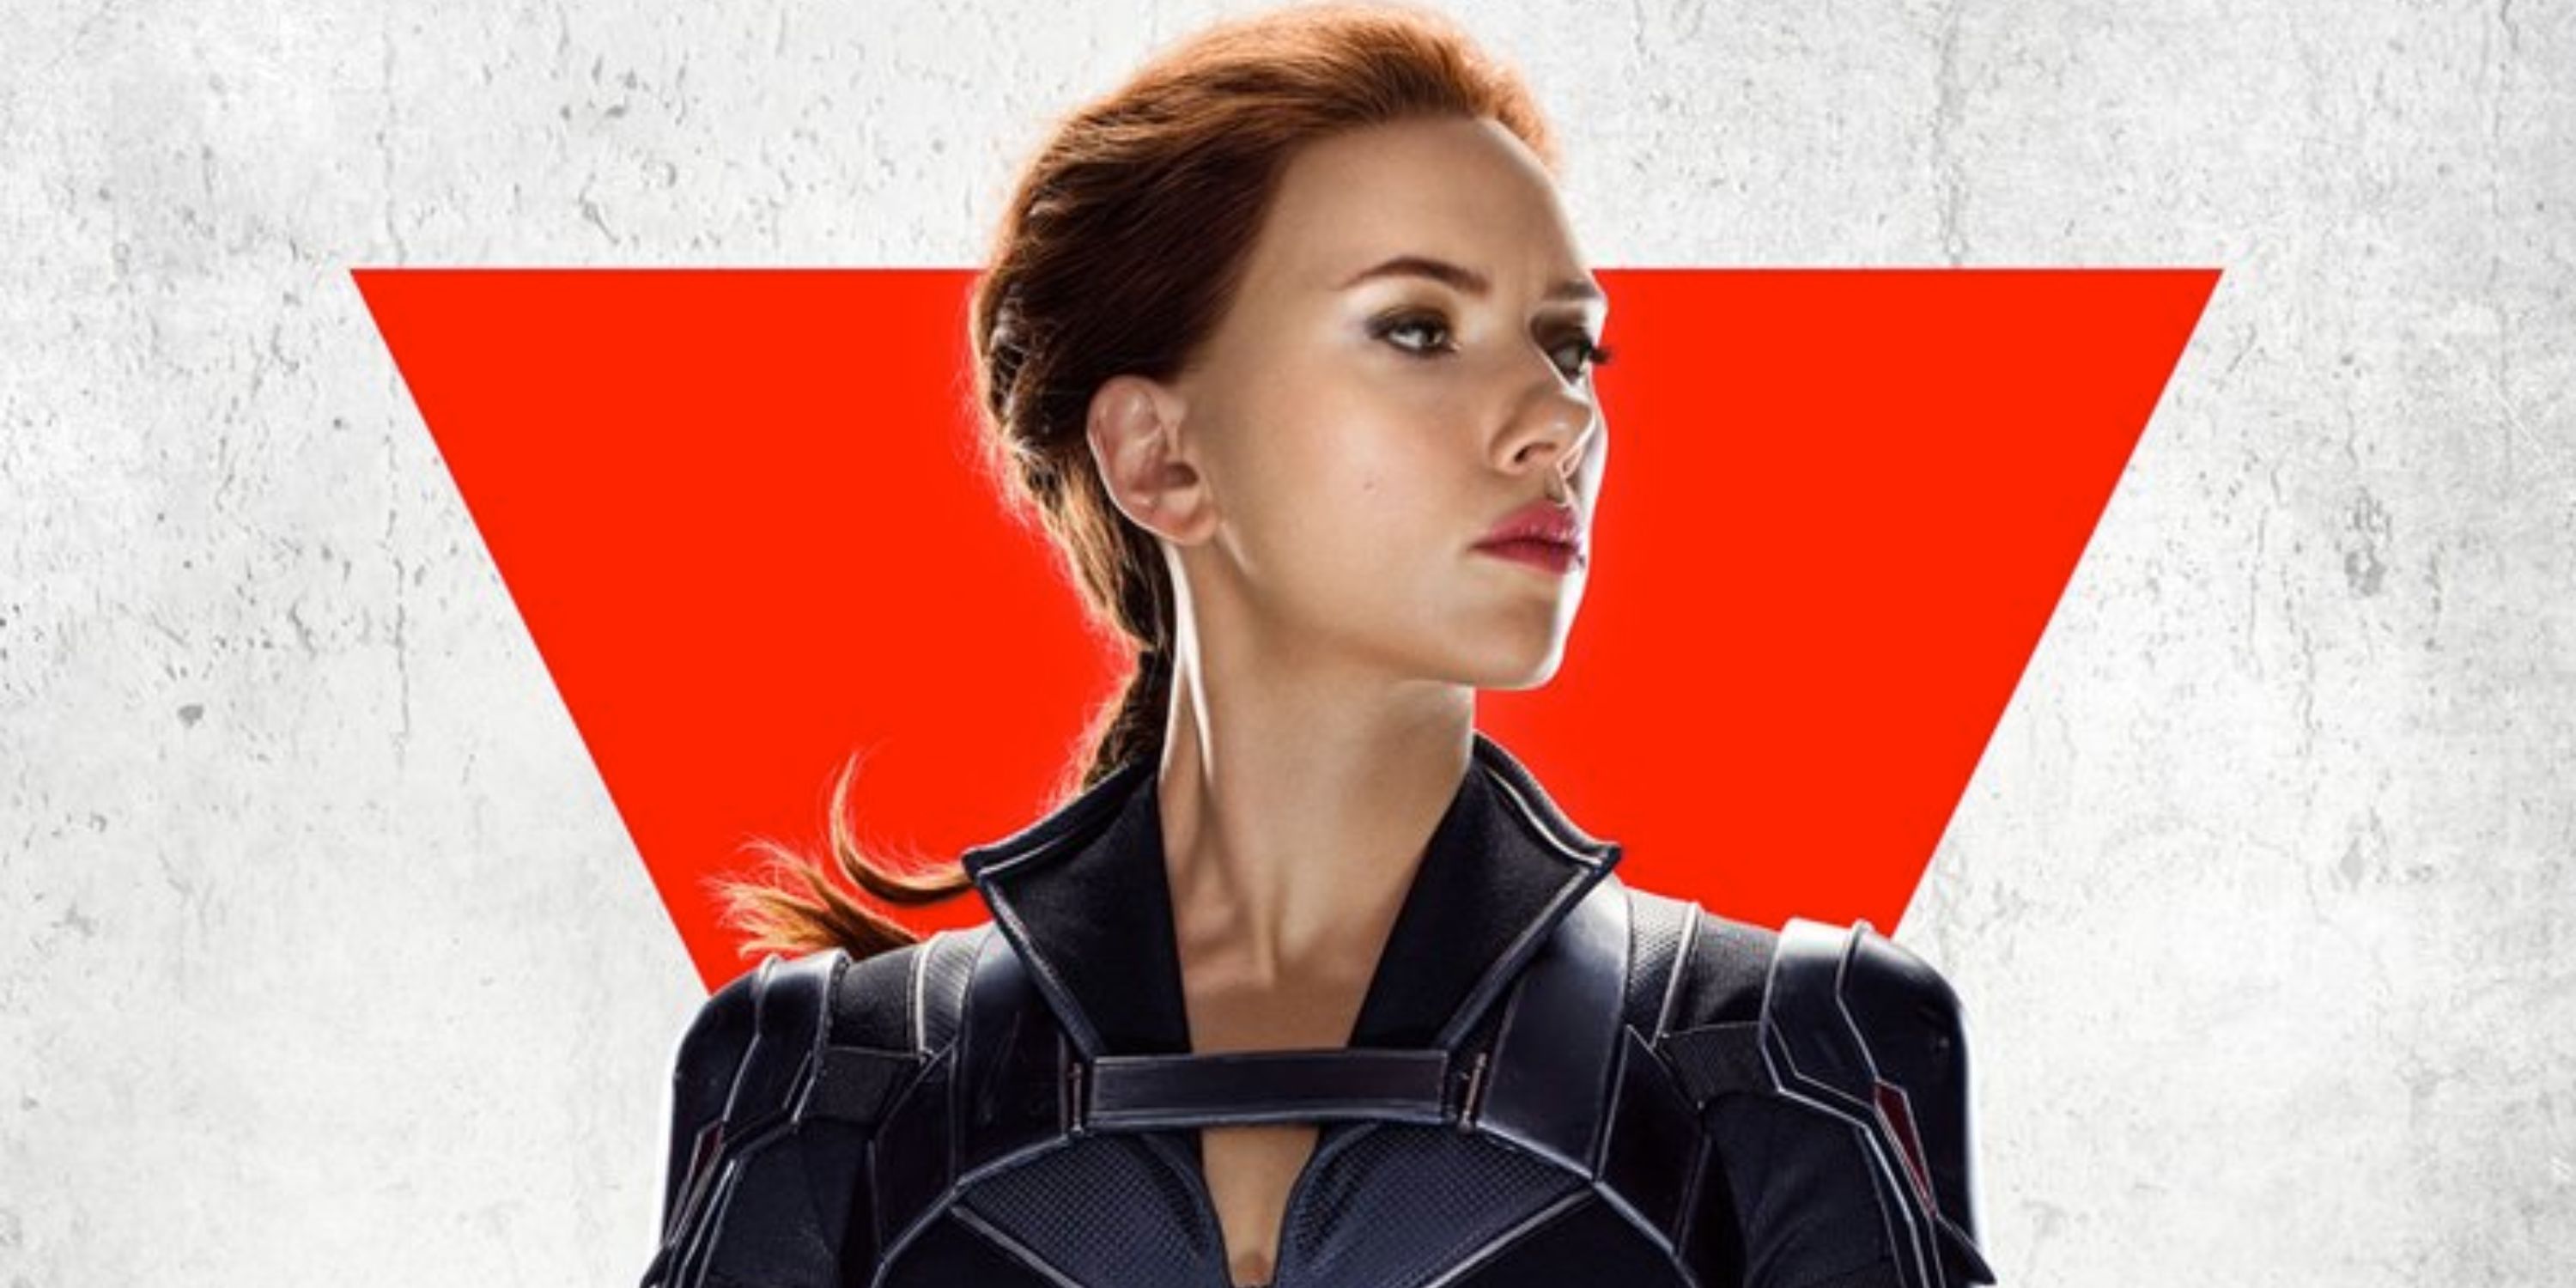 Natasha Romanoff promo for Black Widow.